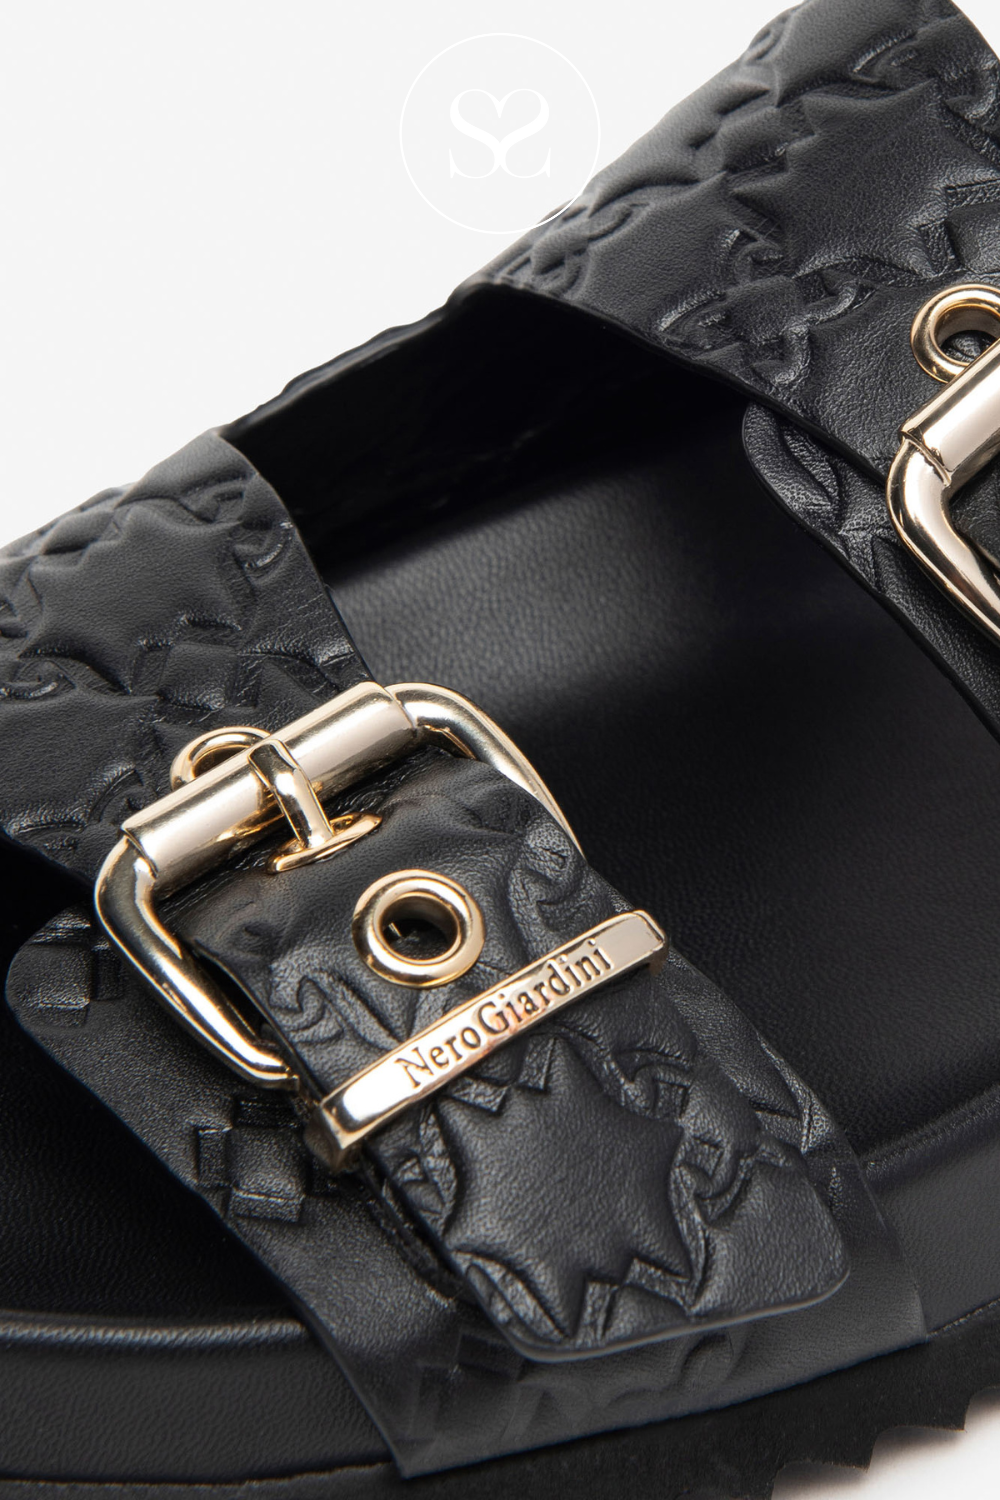 Nero Giardini black sliders for women with gold buckles